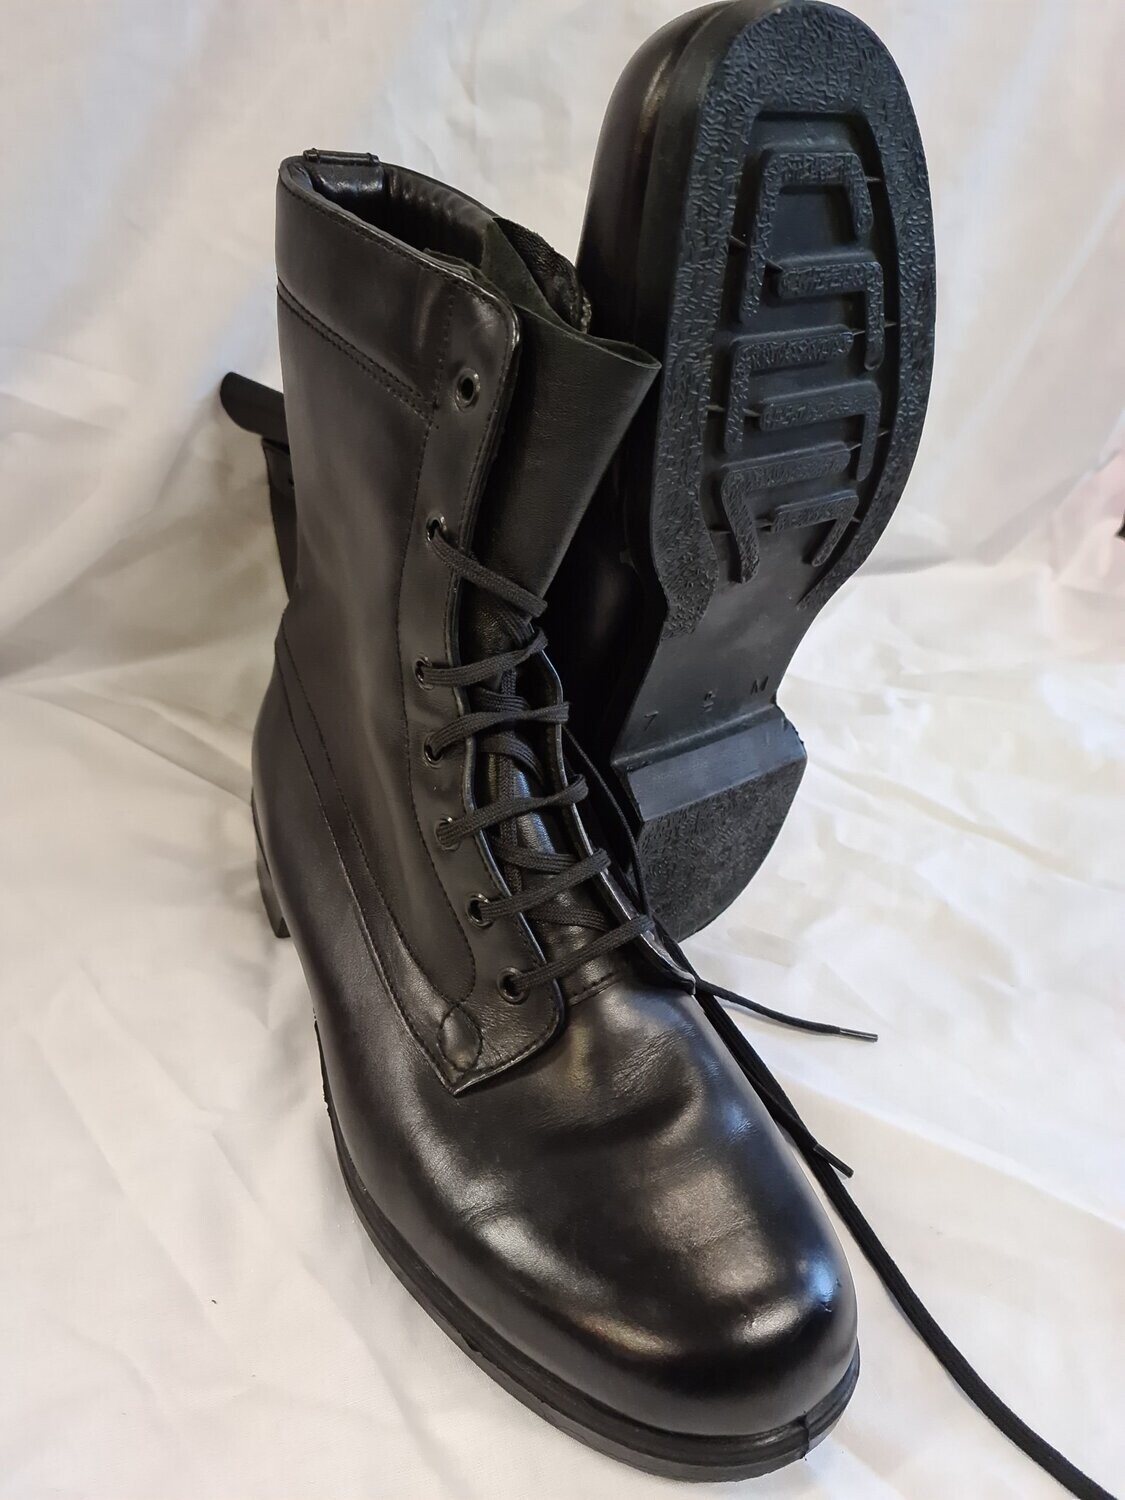 Leather RAF Pilot Boots - Size 7M